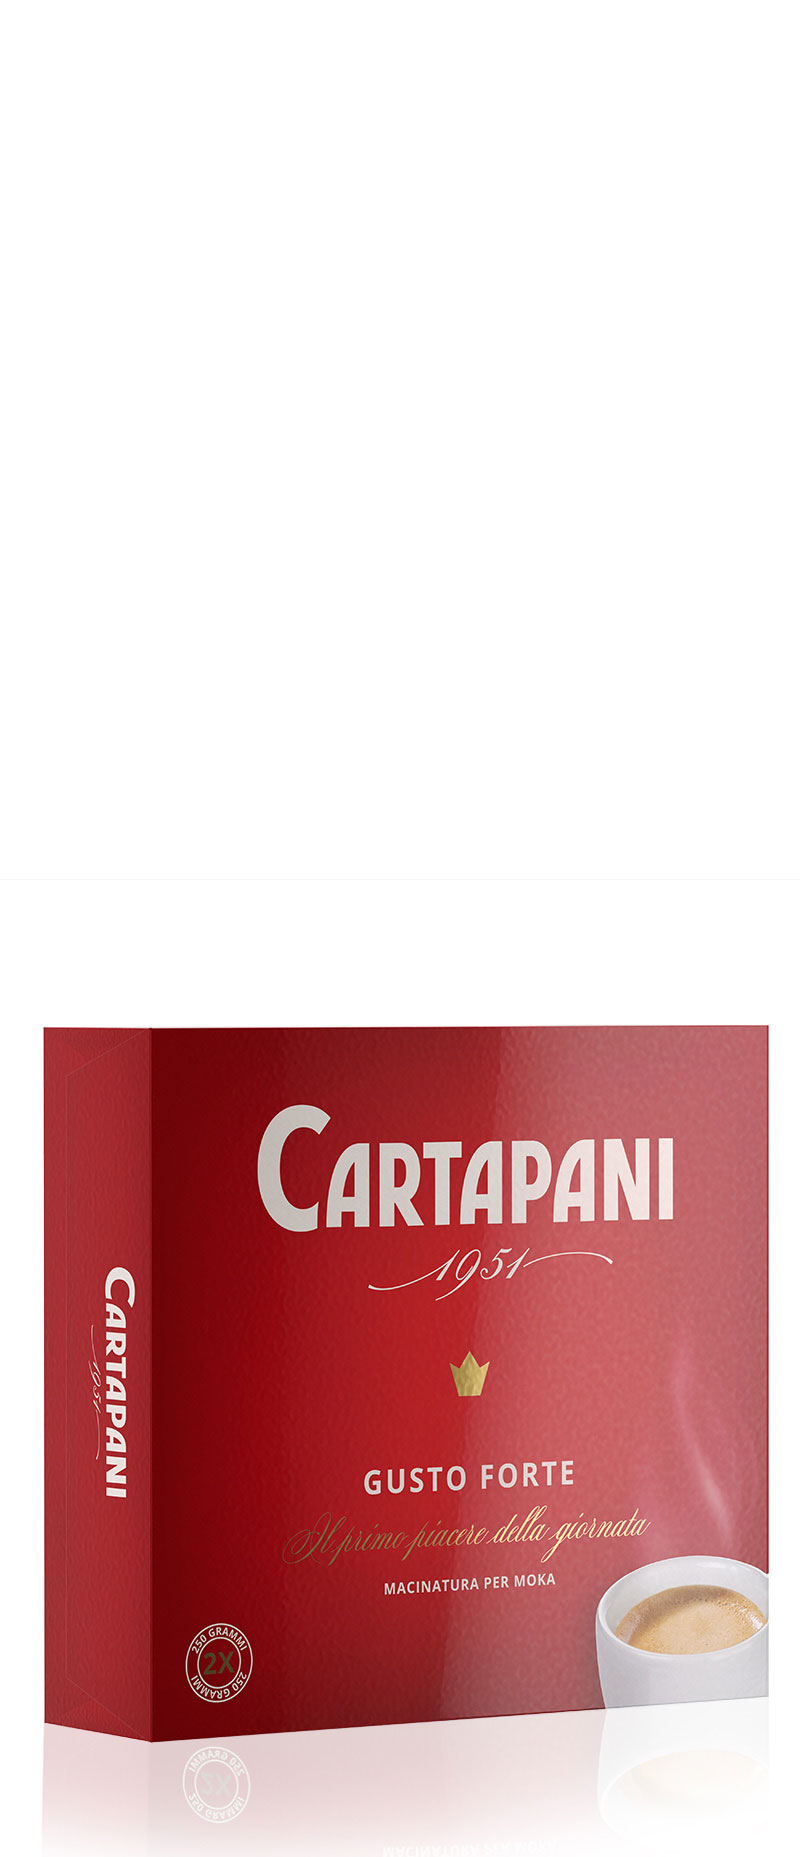 GUSTO FORTE 2X250g macinato - Cartapani